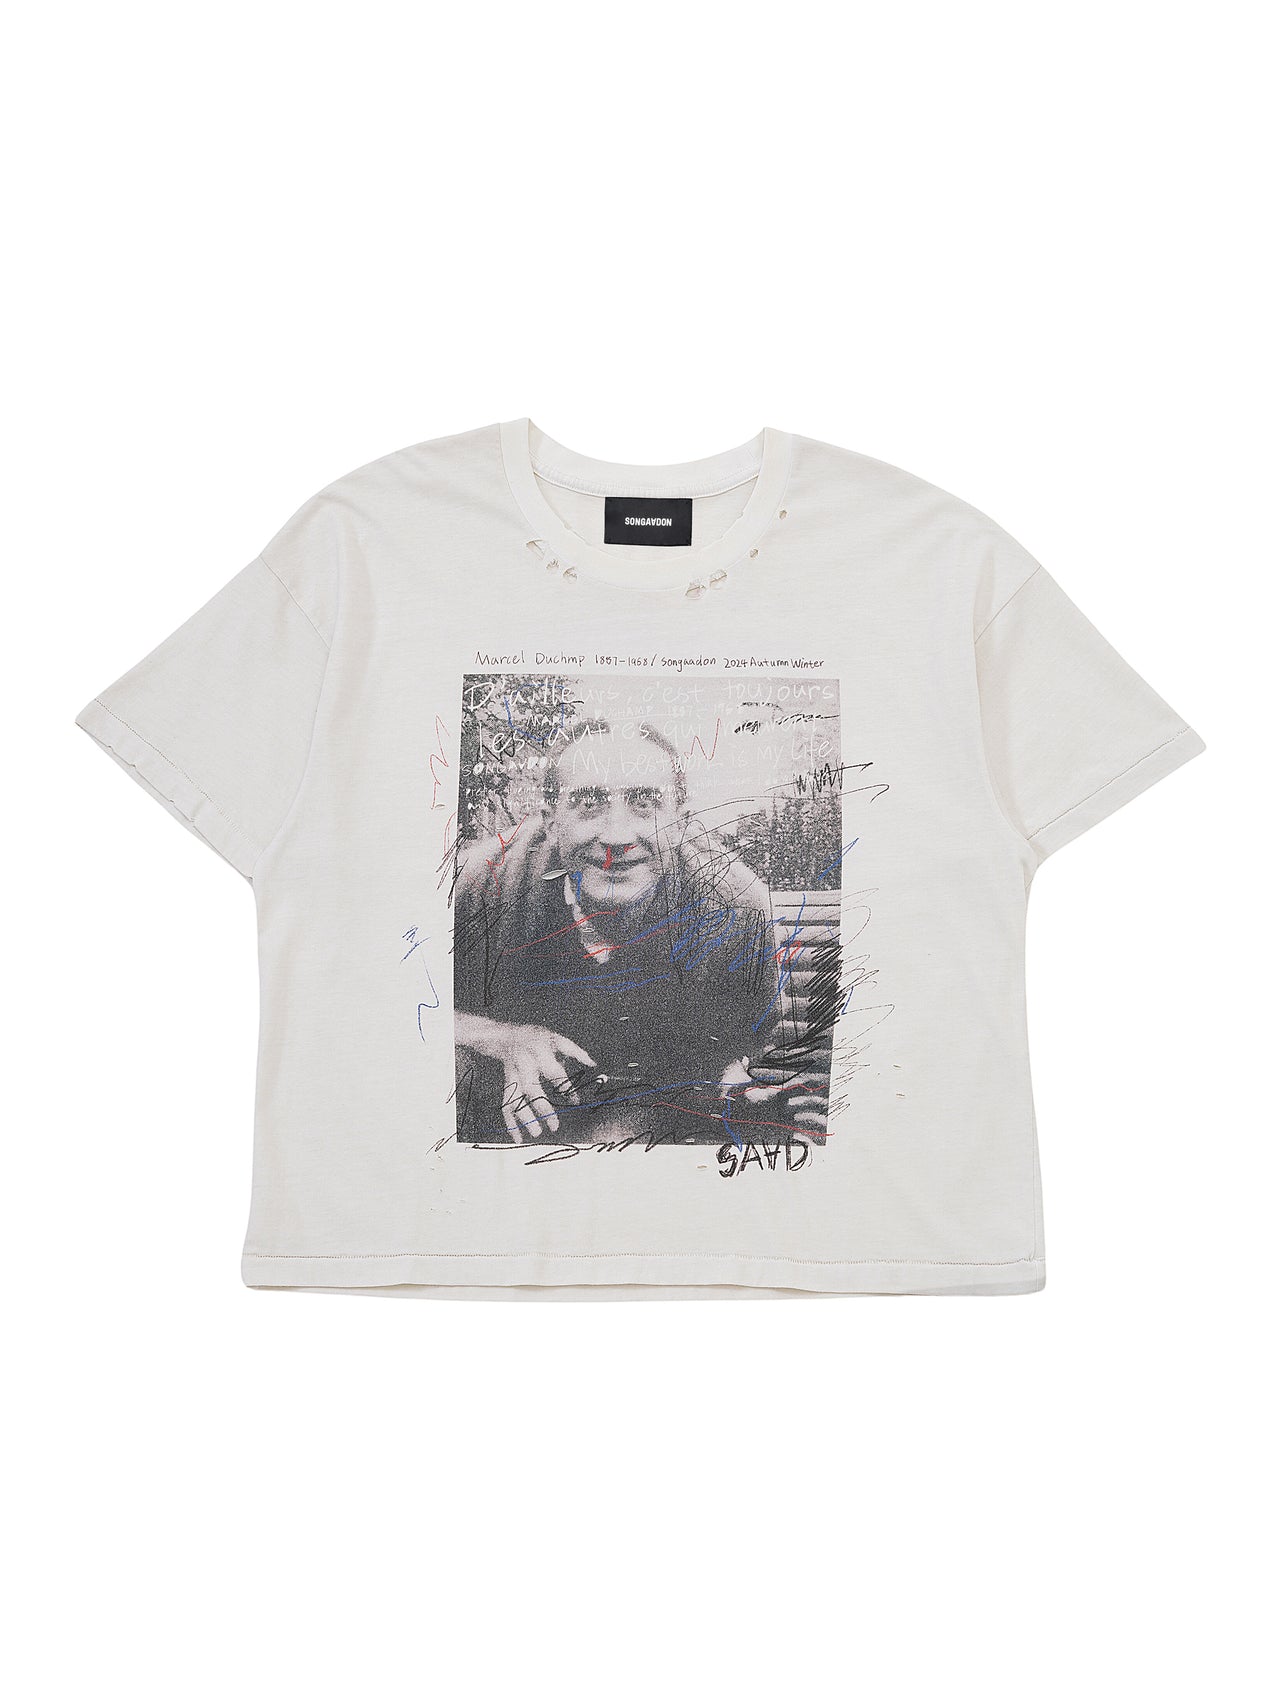 Duchamp portrait T-shirt